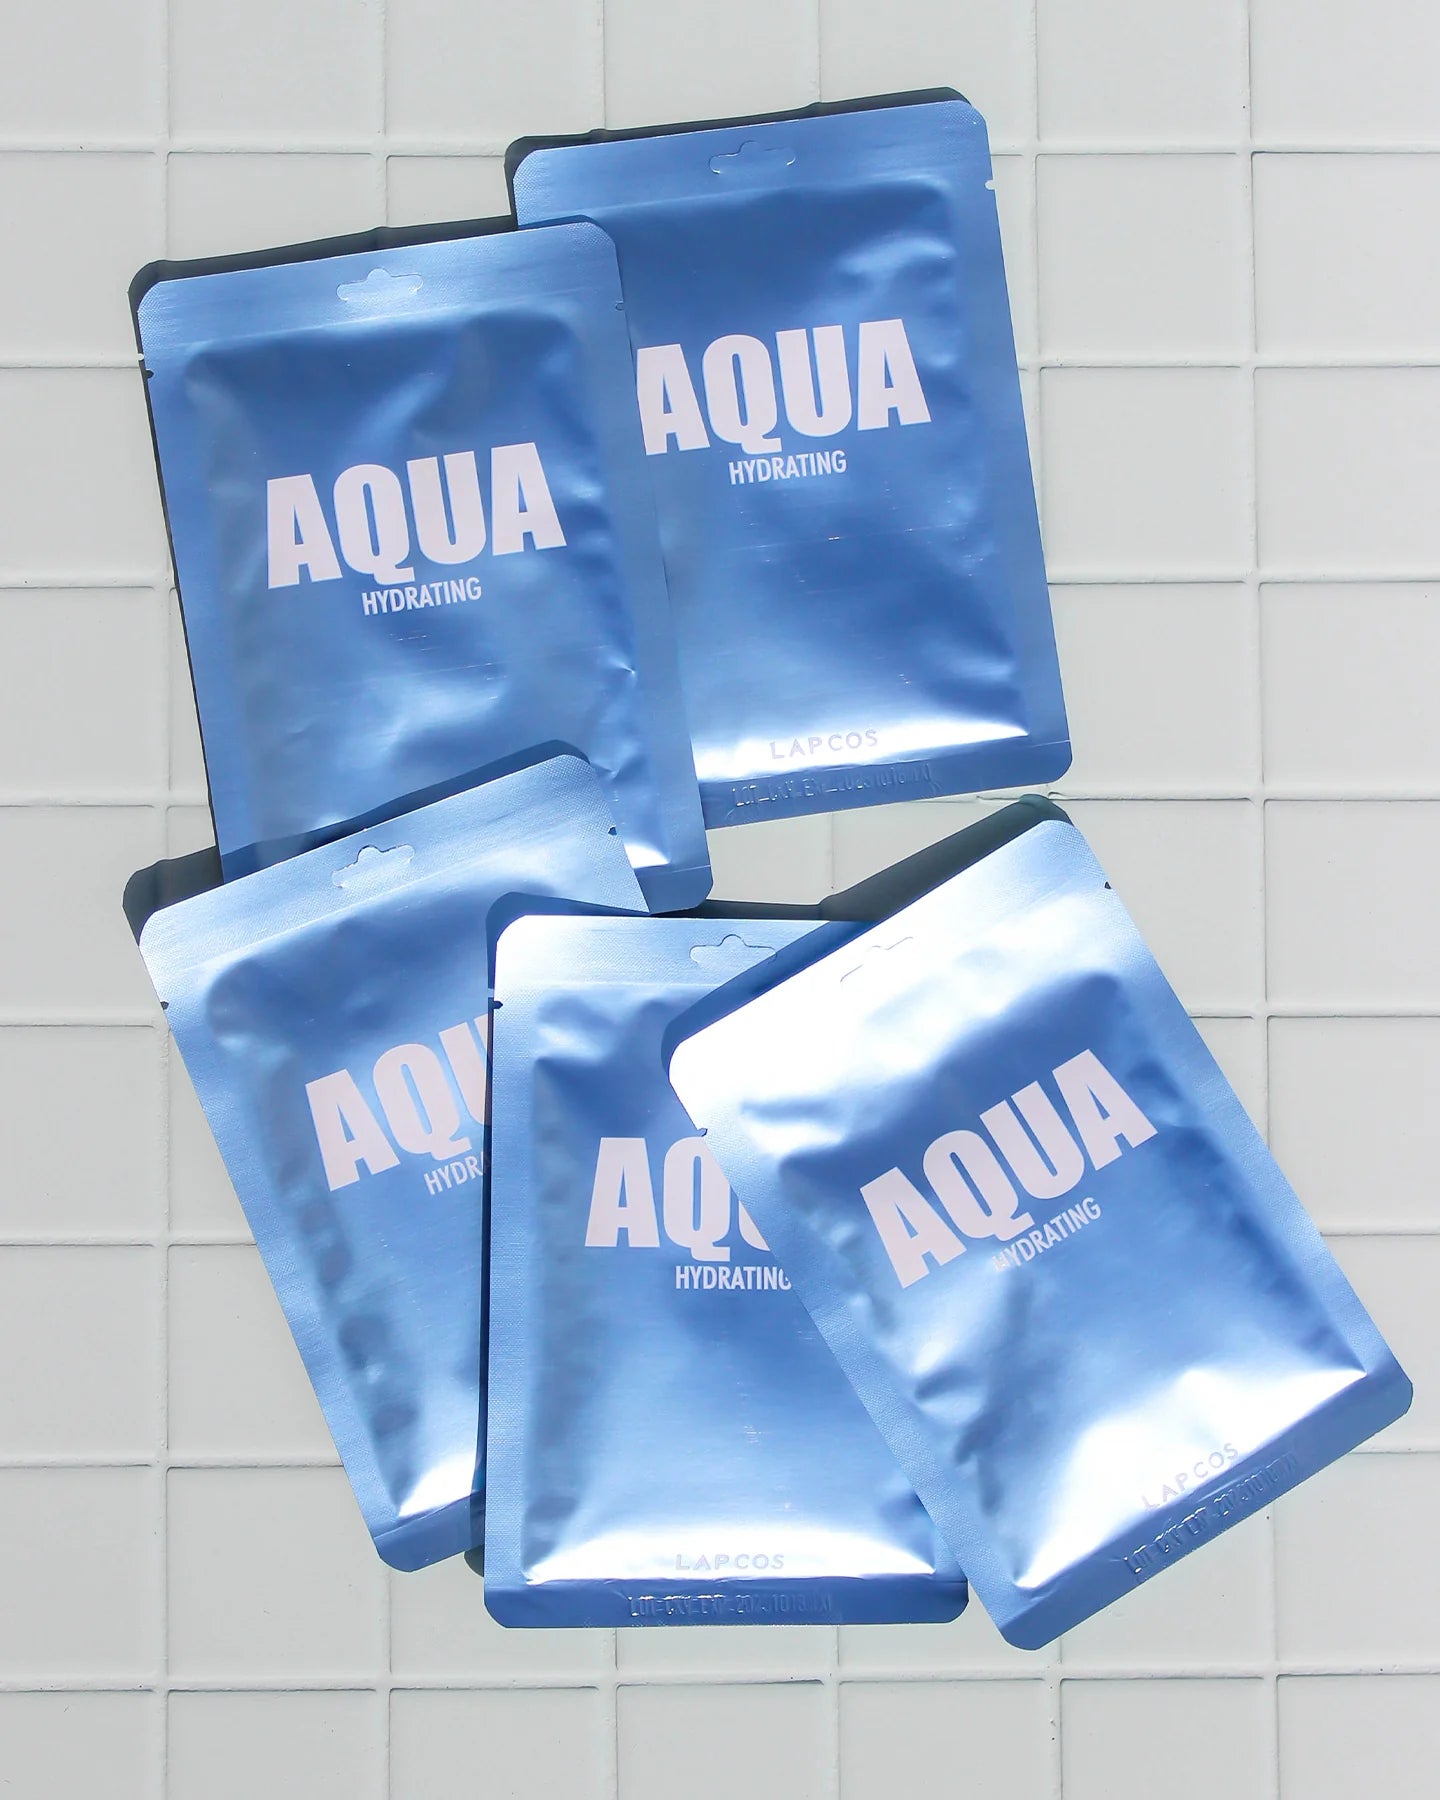 lapcos aqua sheet mask 5 pack at heven on earth